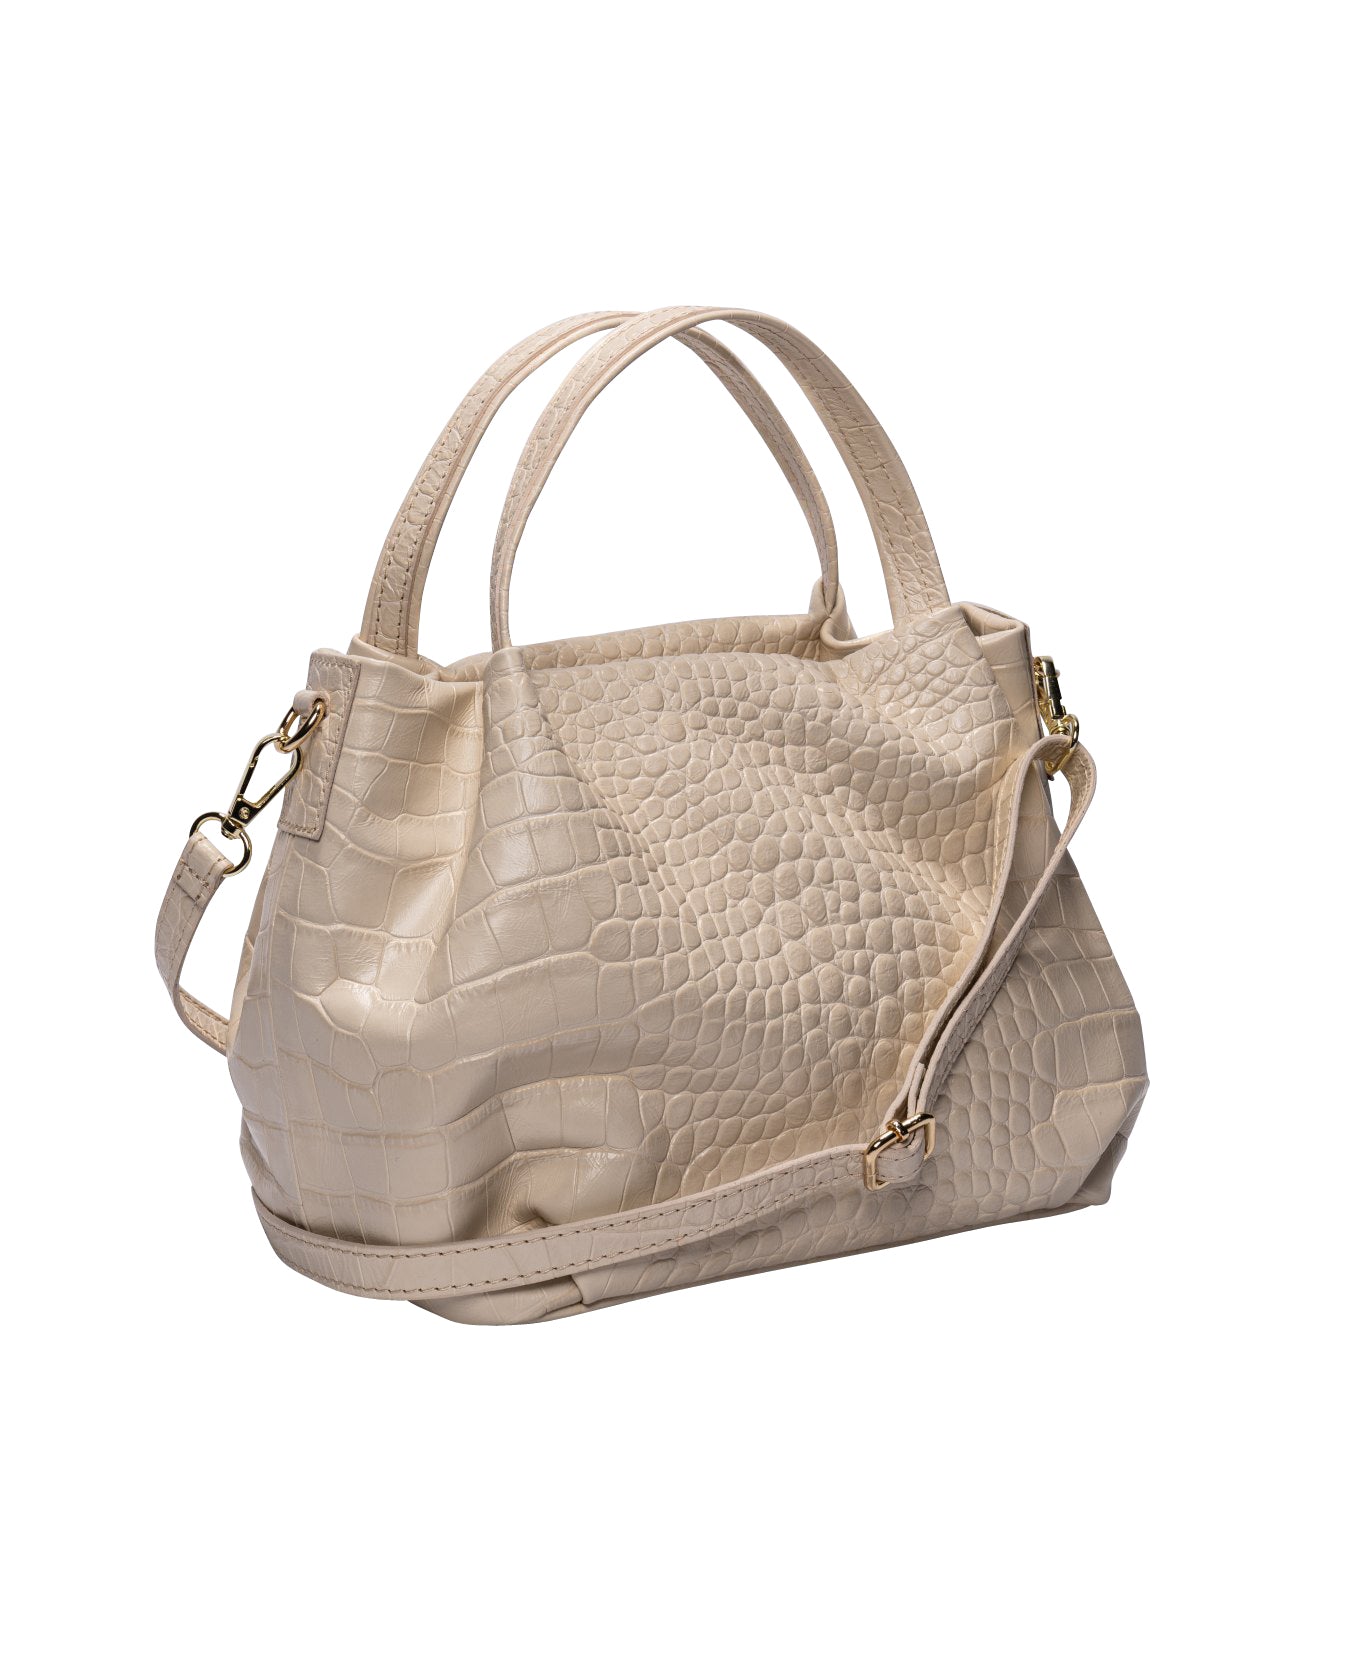 Uffizi bag mock croc leather Off-white – Bidinis Bags